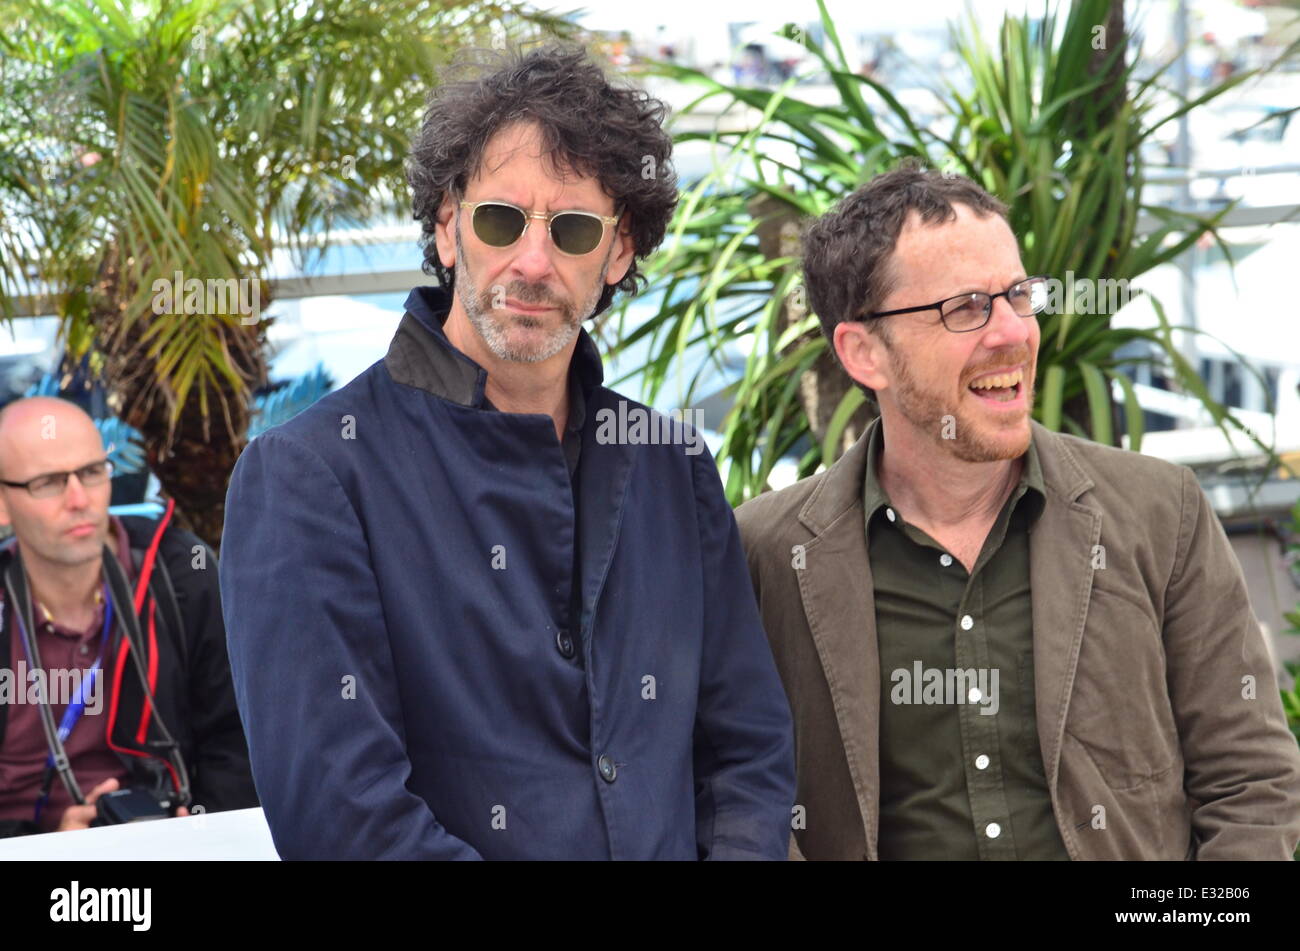 66Cannes Film Festival - 'Inside Llewyn Davis' - Photocall con: fratelli Coen,Joel Coen,Ethan Coen dove: Cannes, Francia Quando: 19 Maggio 2013 Foto Stock